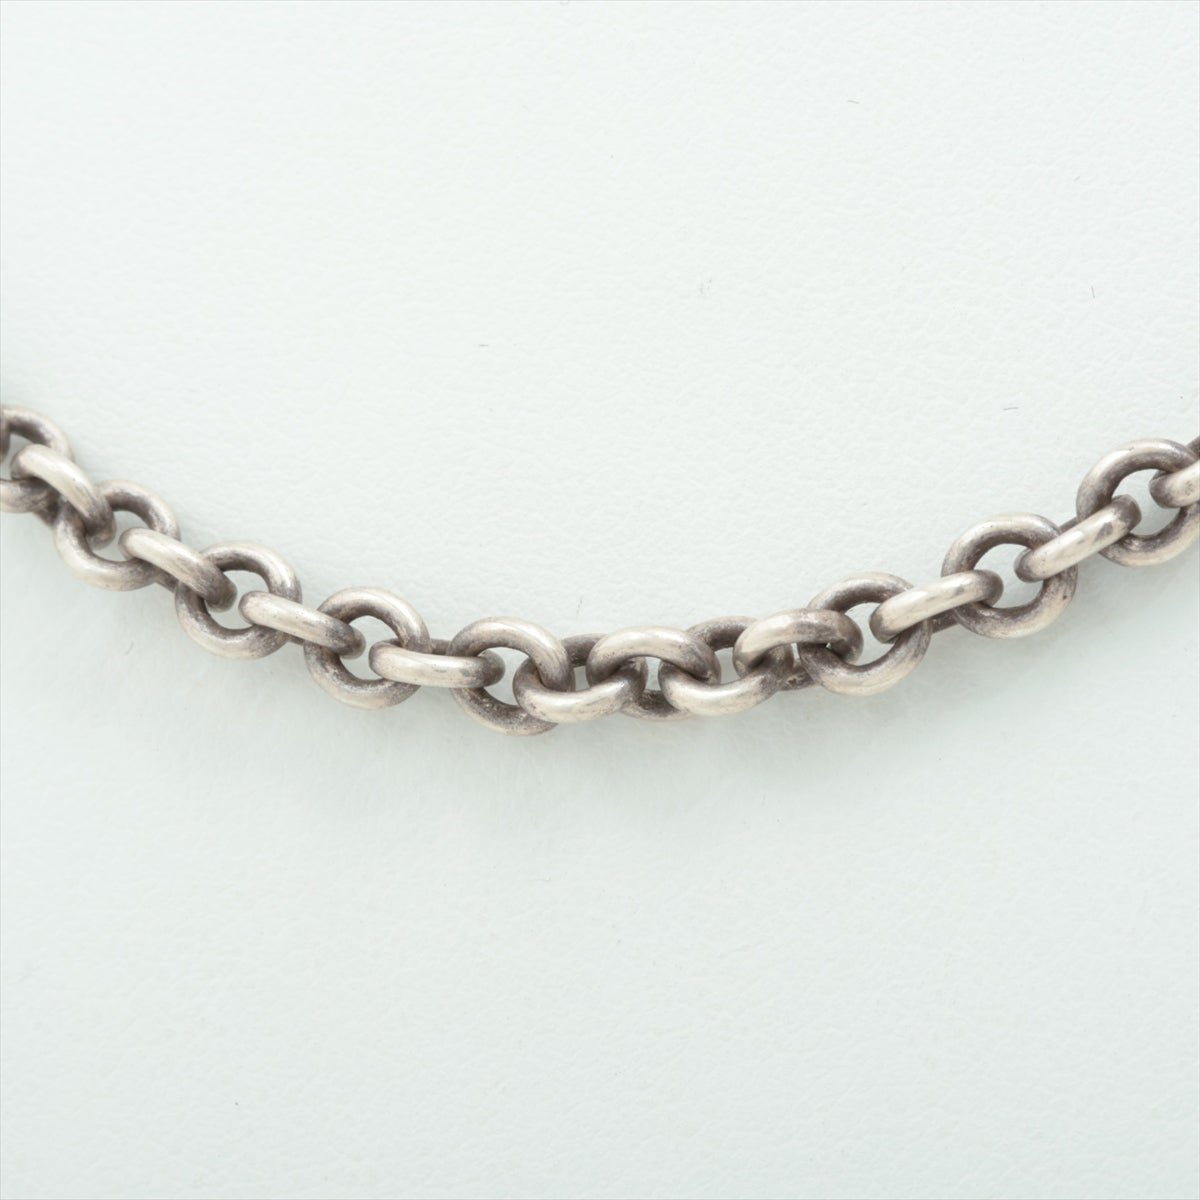 Chrome Hearts NE chain 18 inches Necklace 925 21.5g